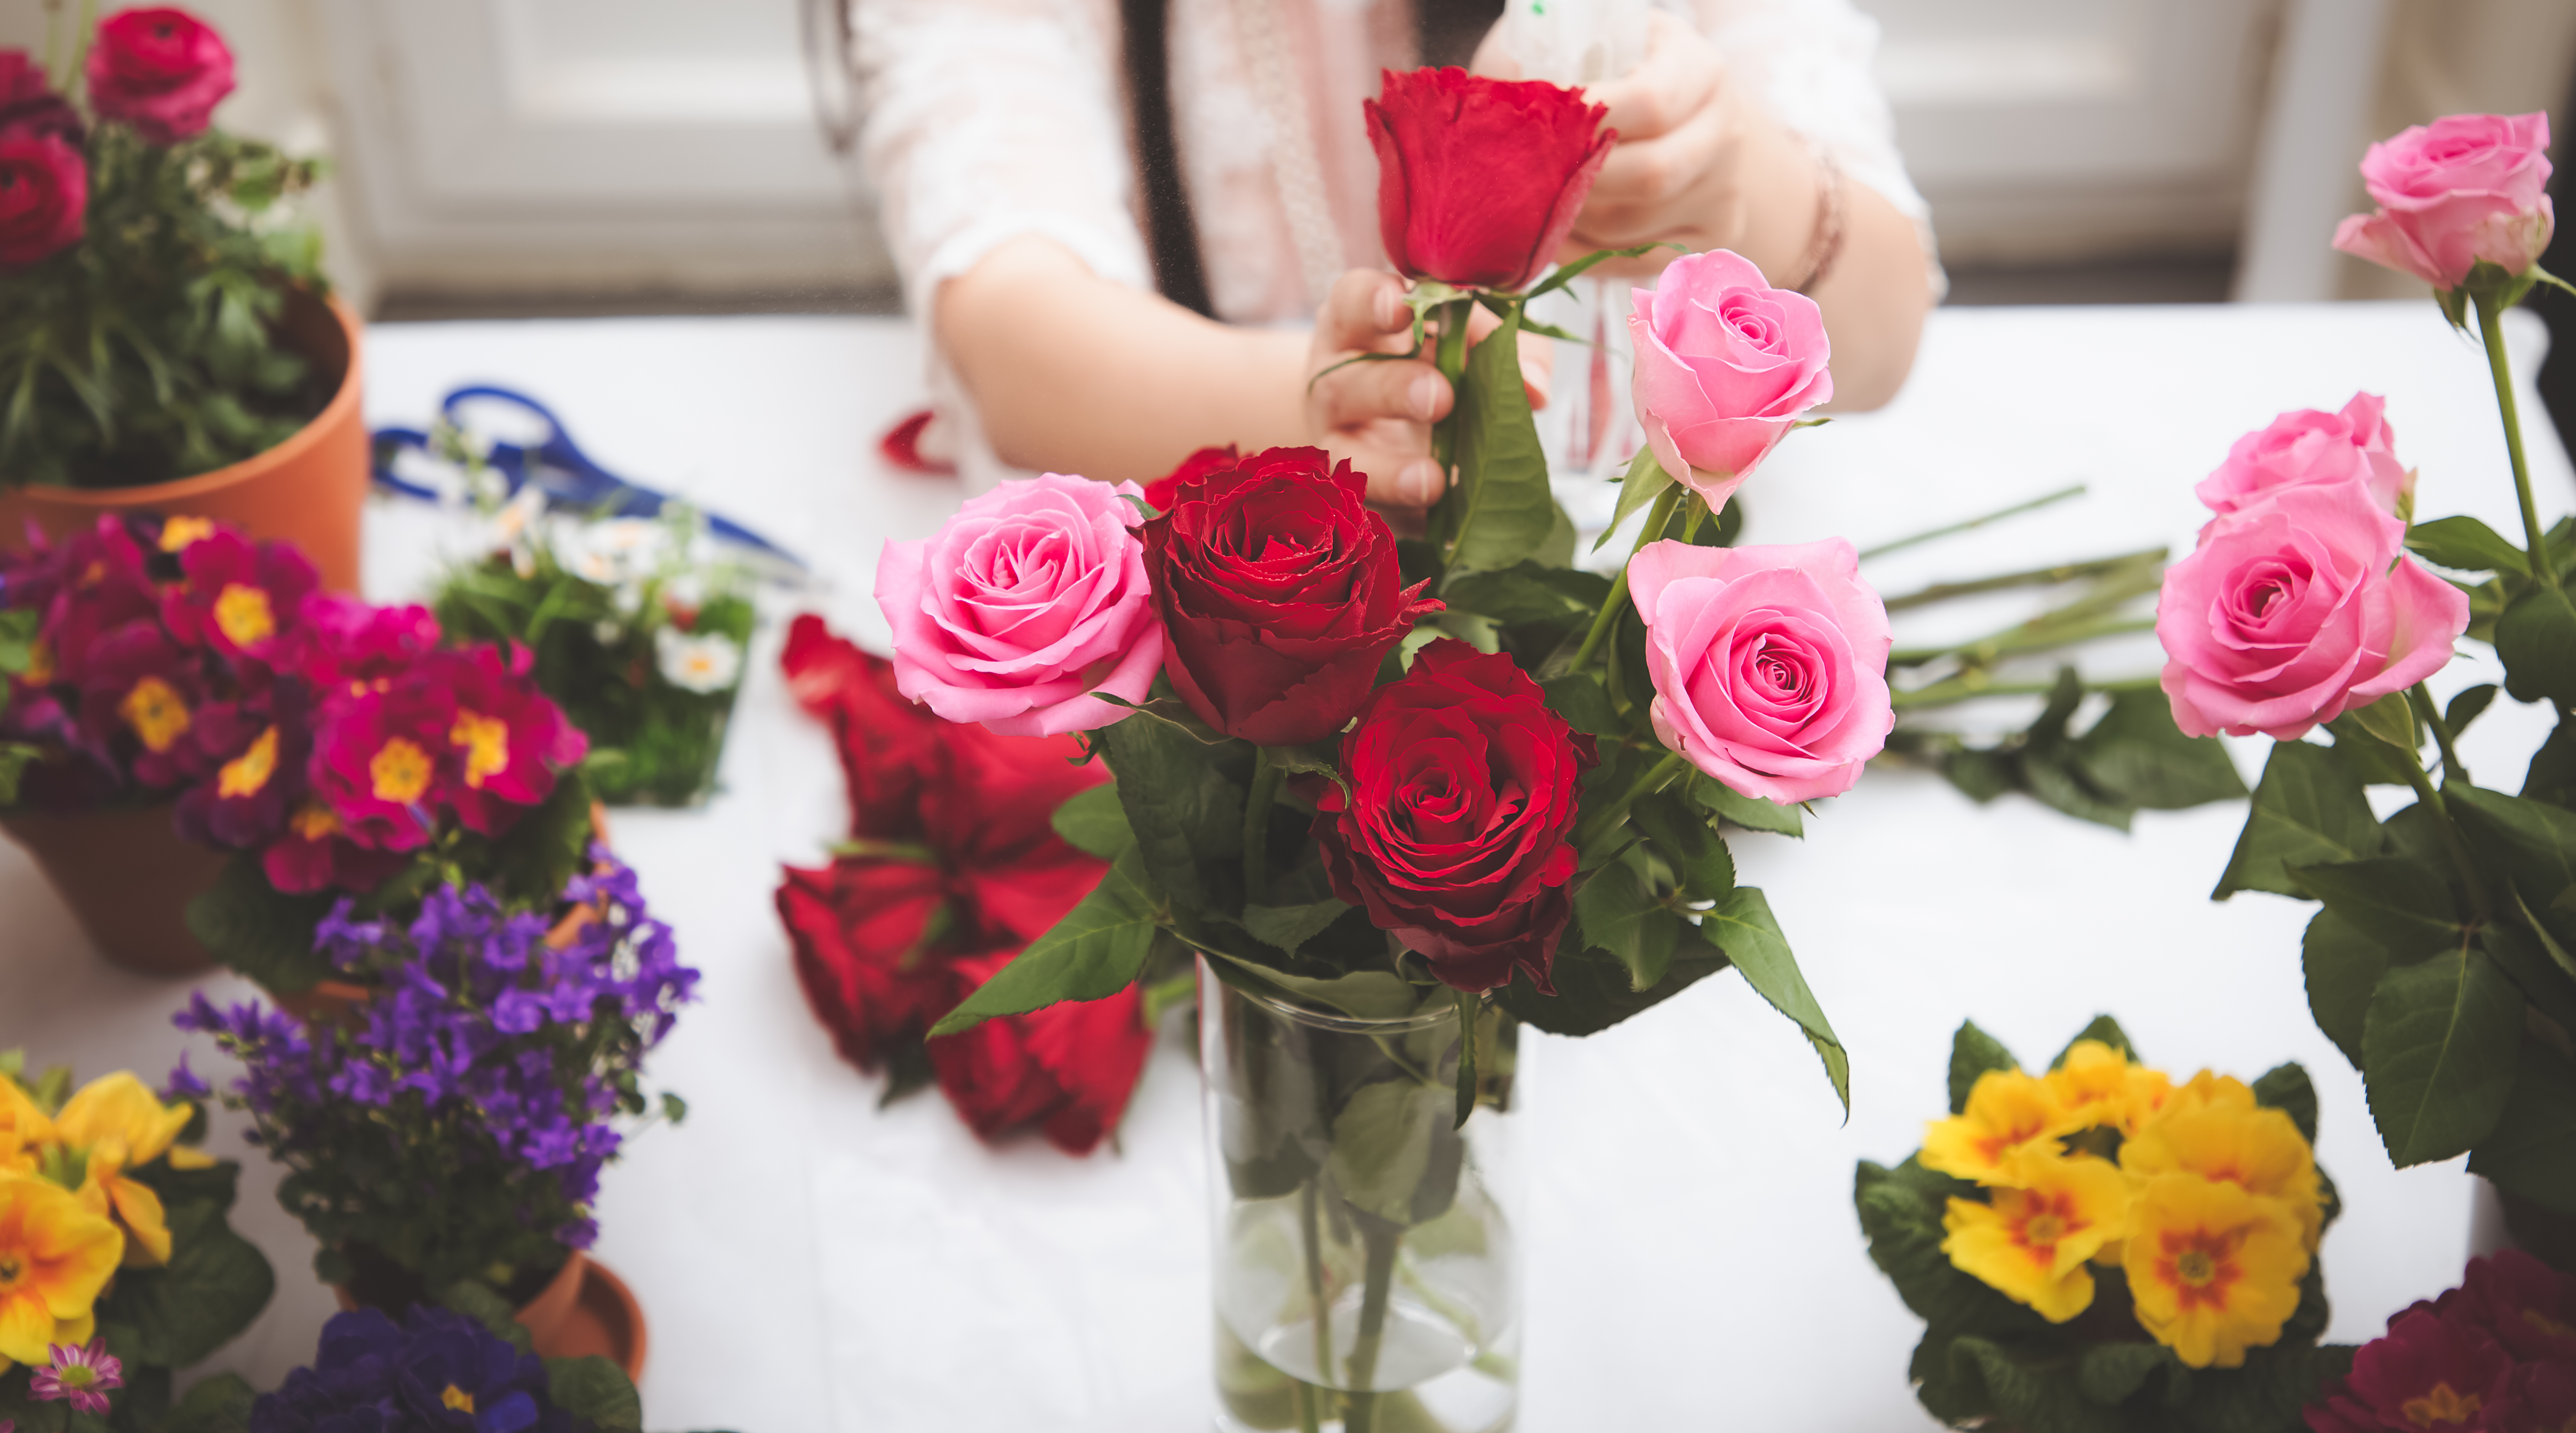 Trending Florist Needs for Valentine's Day